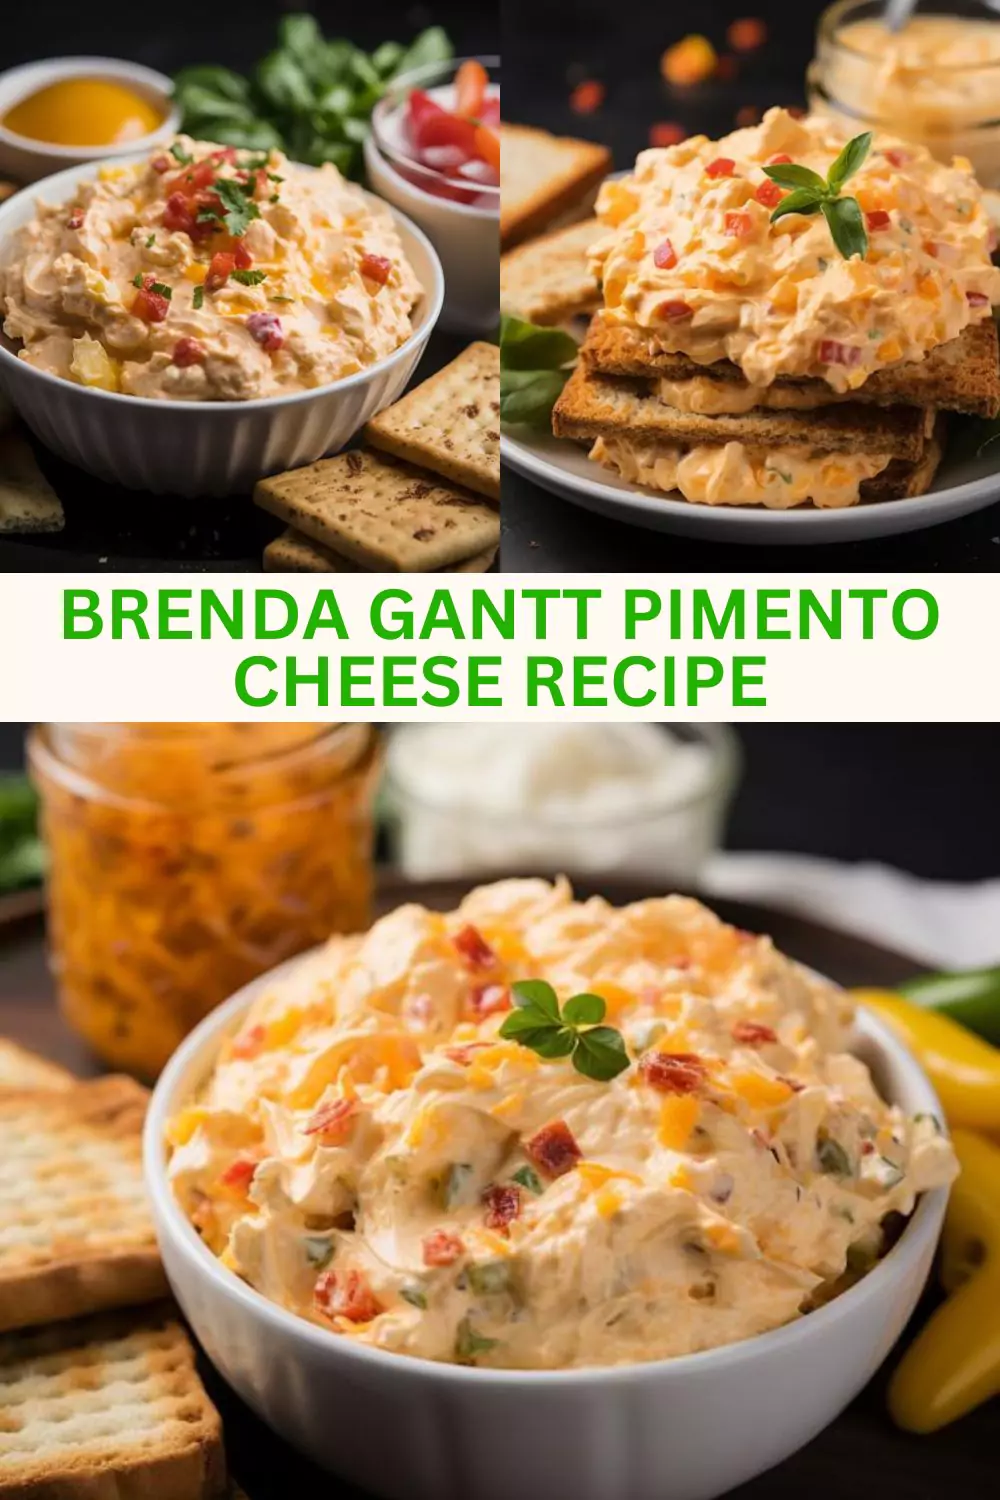 Brenda Gantt Pimento Cheese Recipe